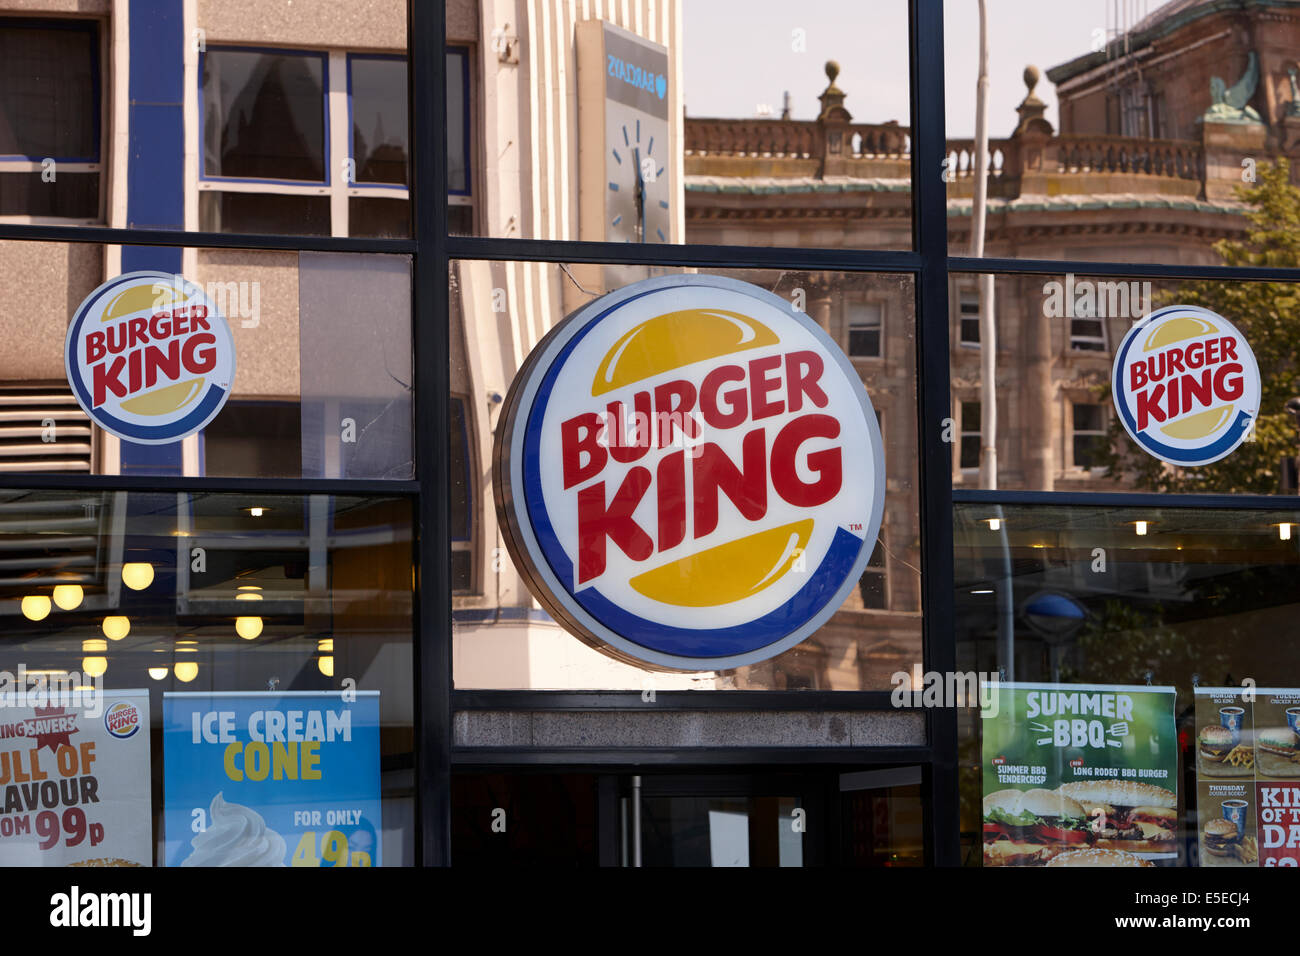 burger king fast food restaurant logo in Belfast city centre Stock Photo